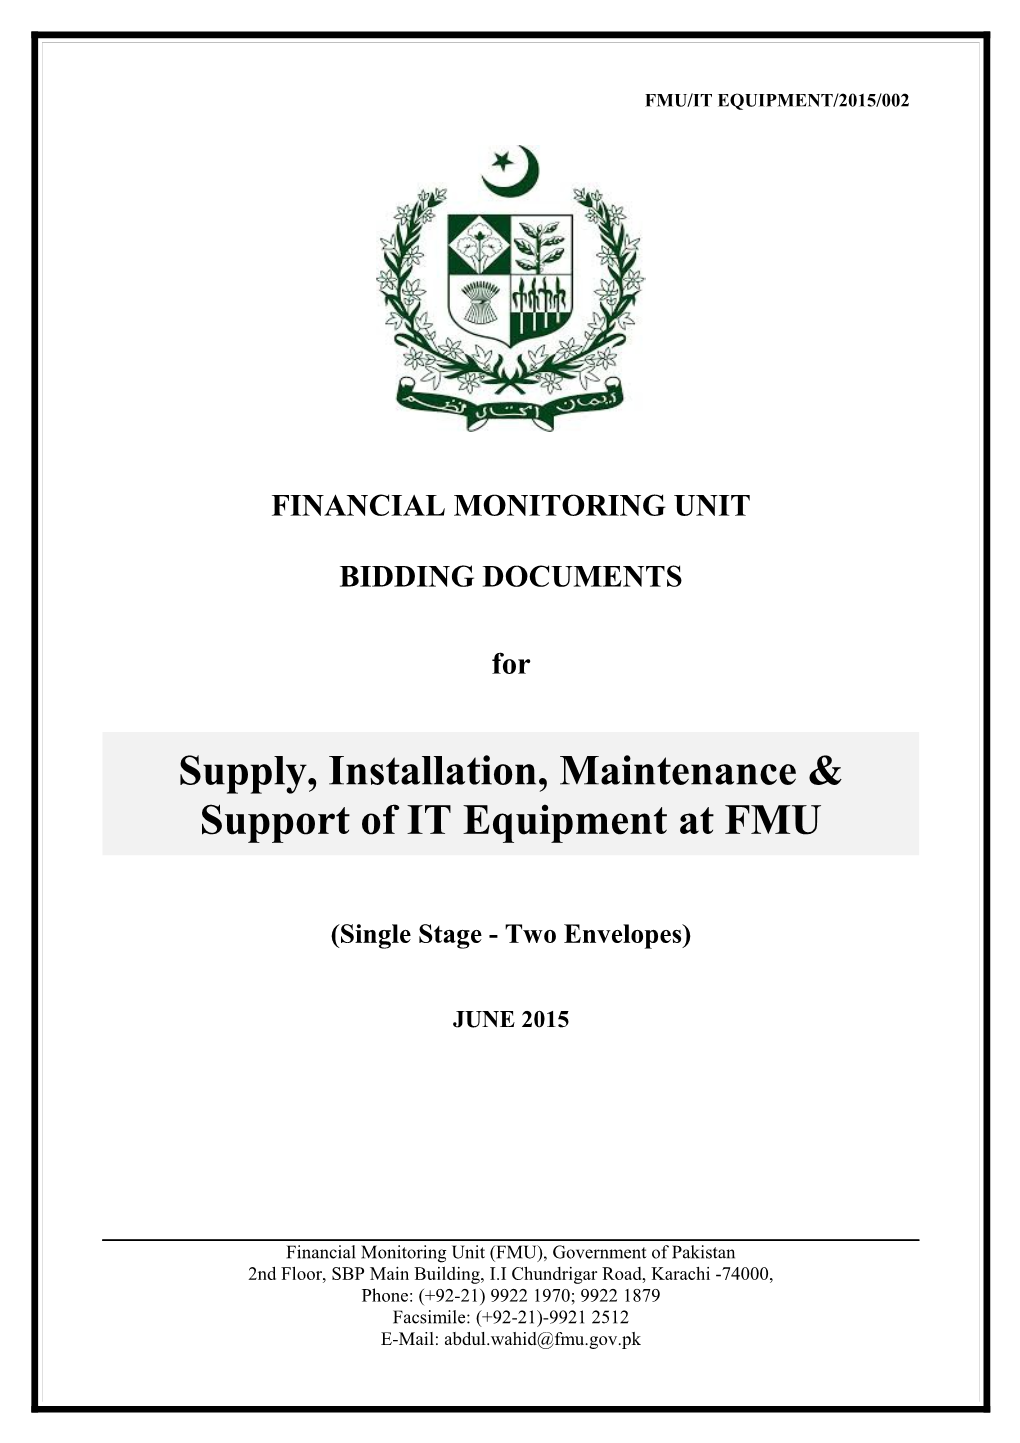 Supply, Installation, Maintenance & Support of IT Equipment at FMU